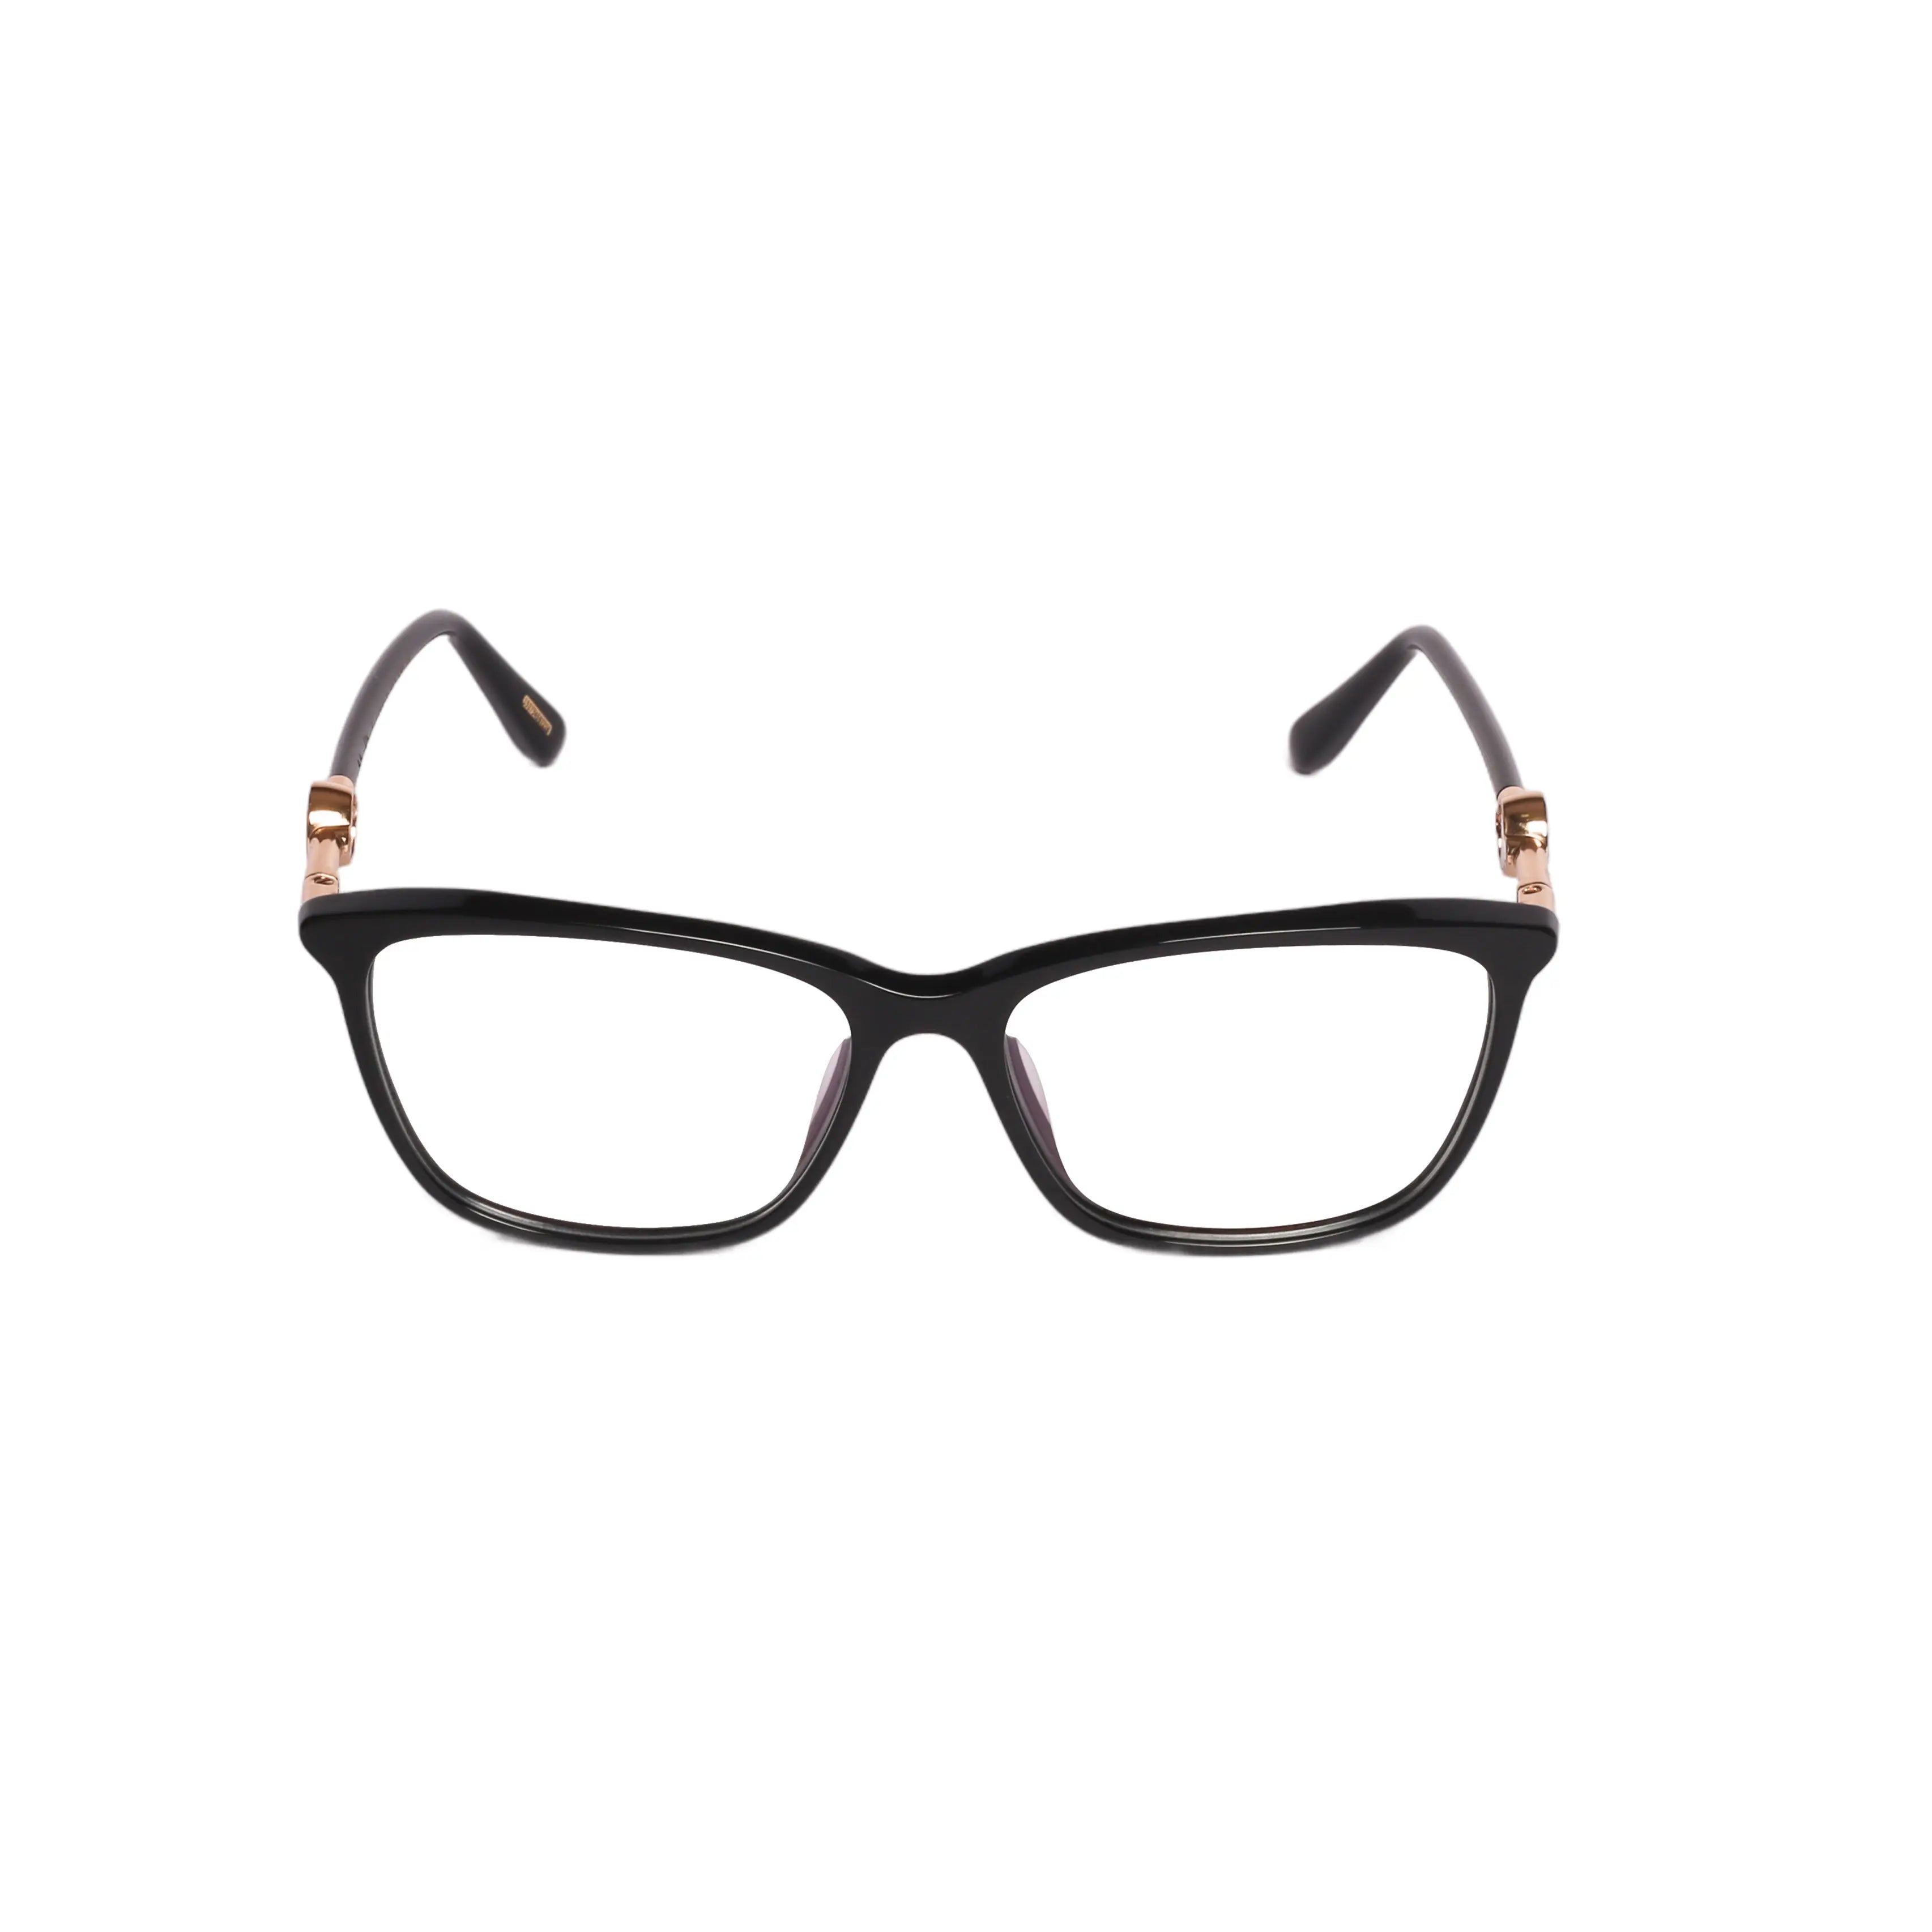 CHOPARD-VCH 284S-54-700 Eyeglasses - Premium Eyeglasses from CHOPARD - Just Rs. 37500! Shop now at Laxmi Opticians